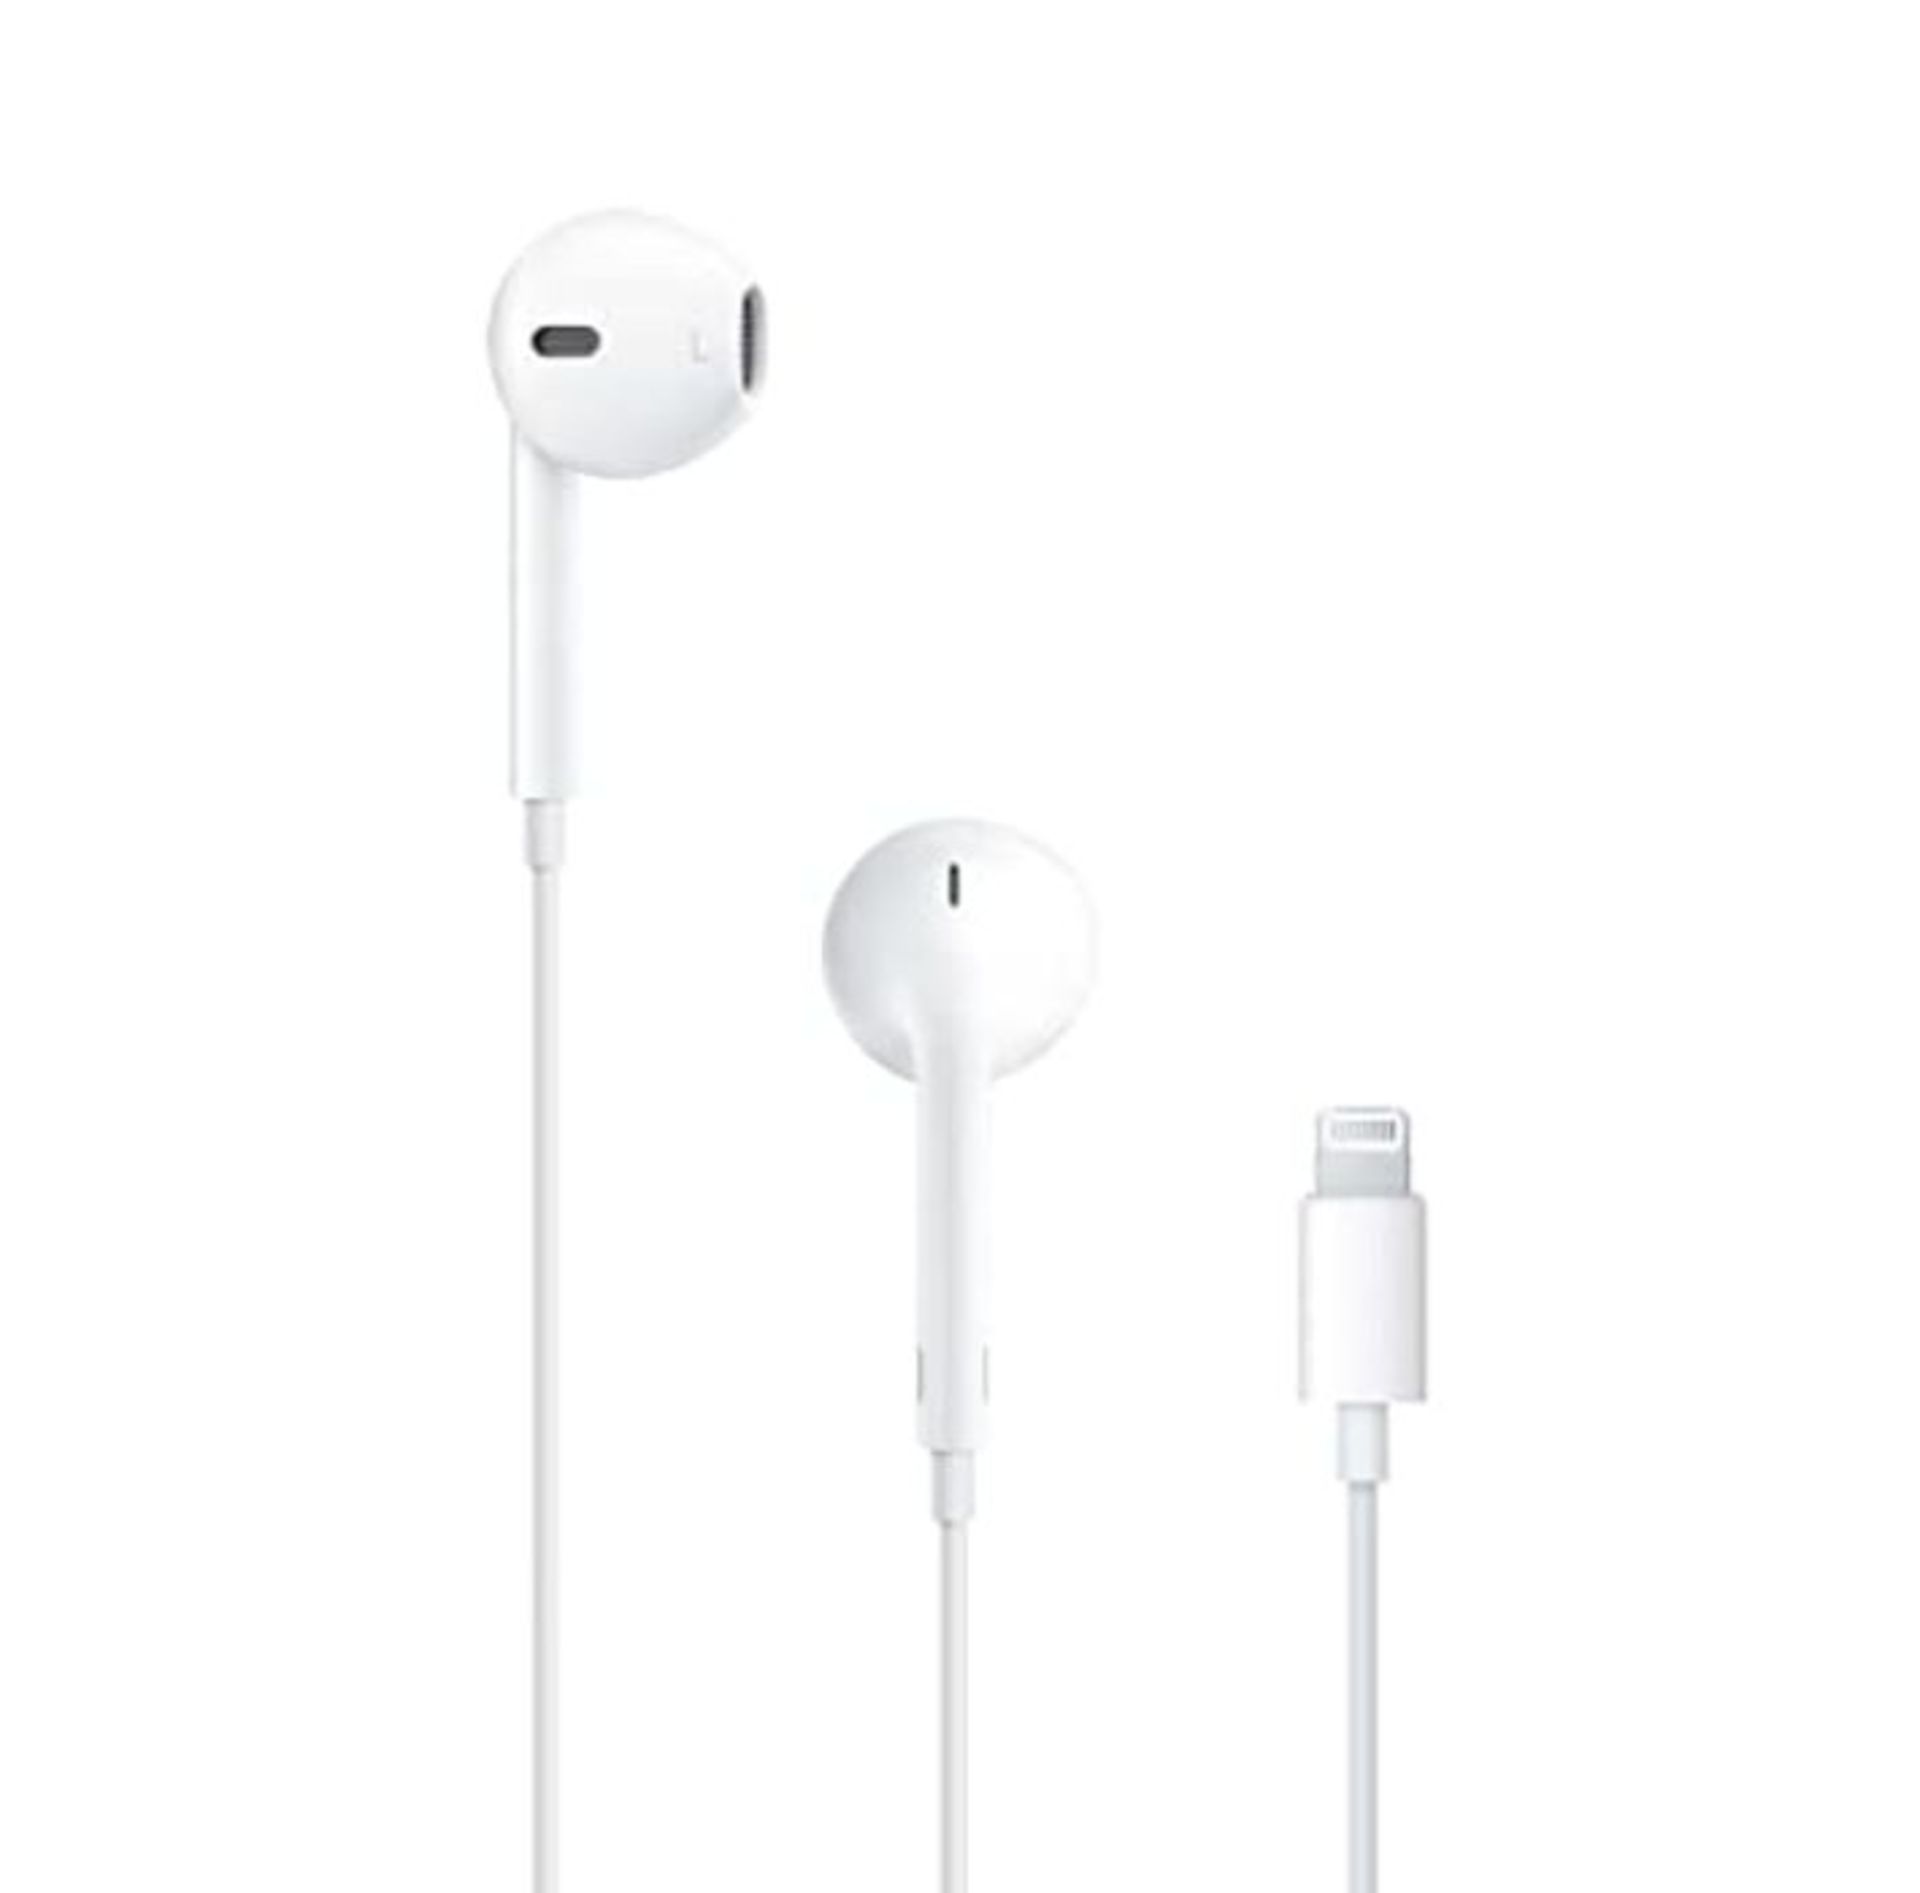 A�p�p�l�e� �E�a�r�P�o�d�s� �a�v�e�c� �c�o�n�n�e�c�t�e�u�r� �L�i�g�h�t�n�i�n�g�